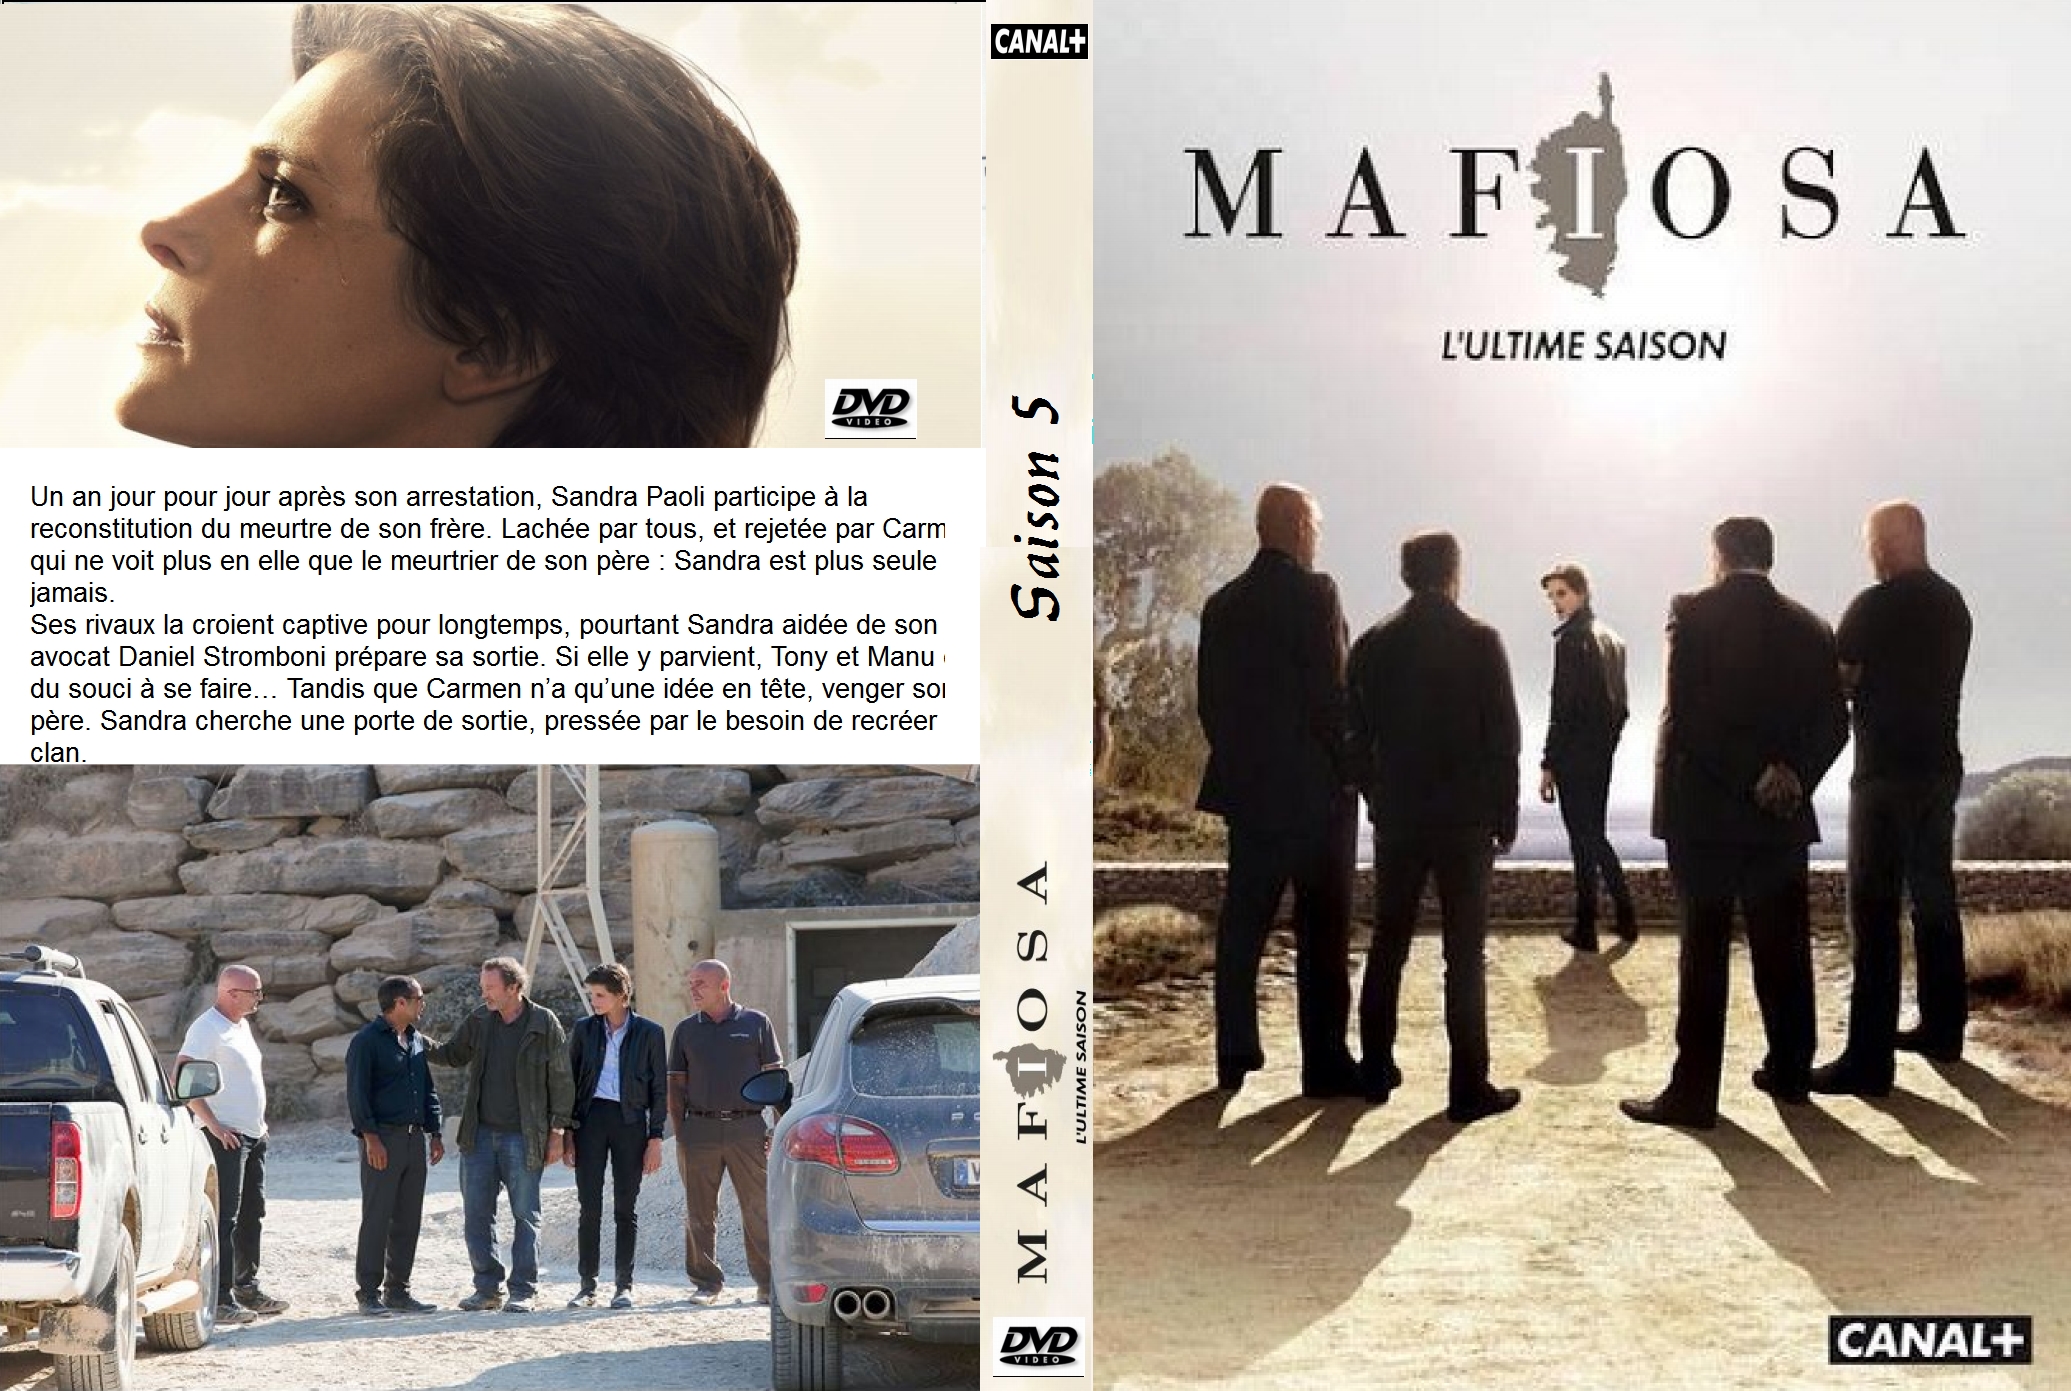 Jaquette DVD Mafiosa Saison 5 custom